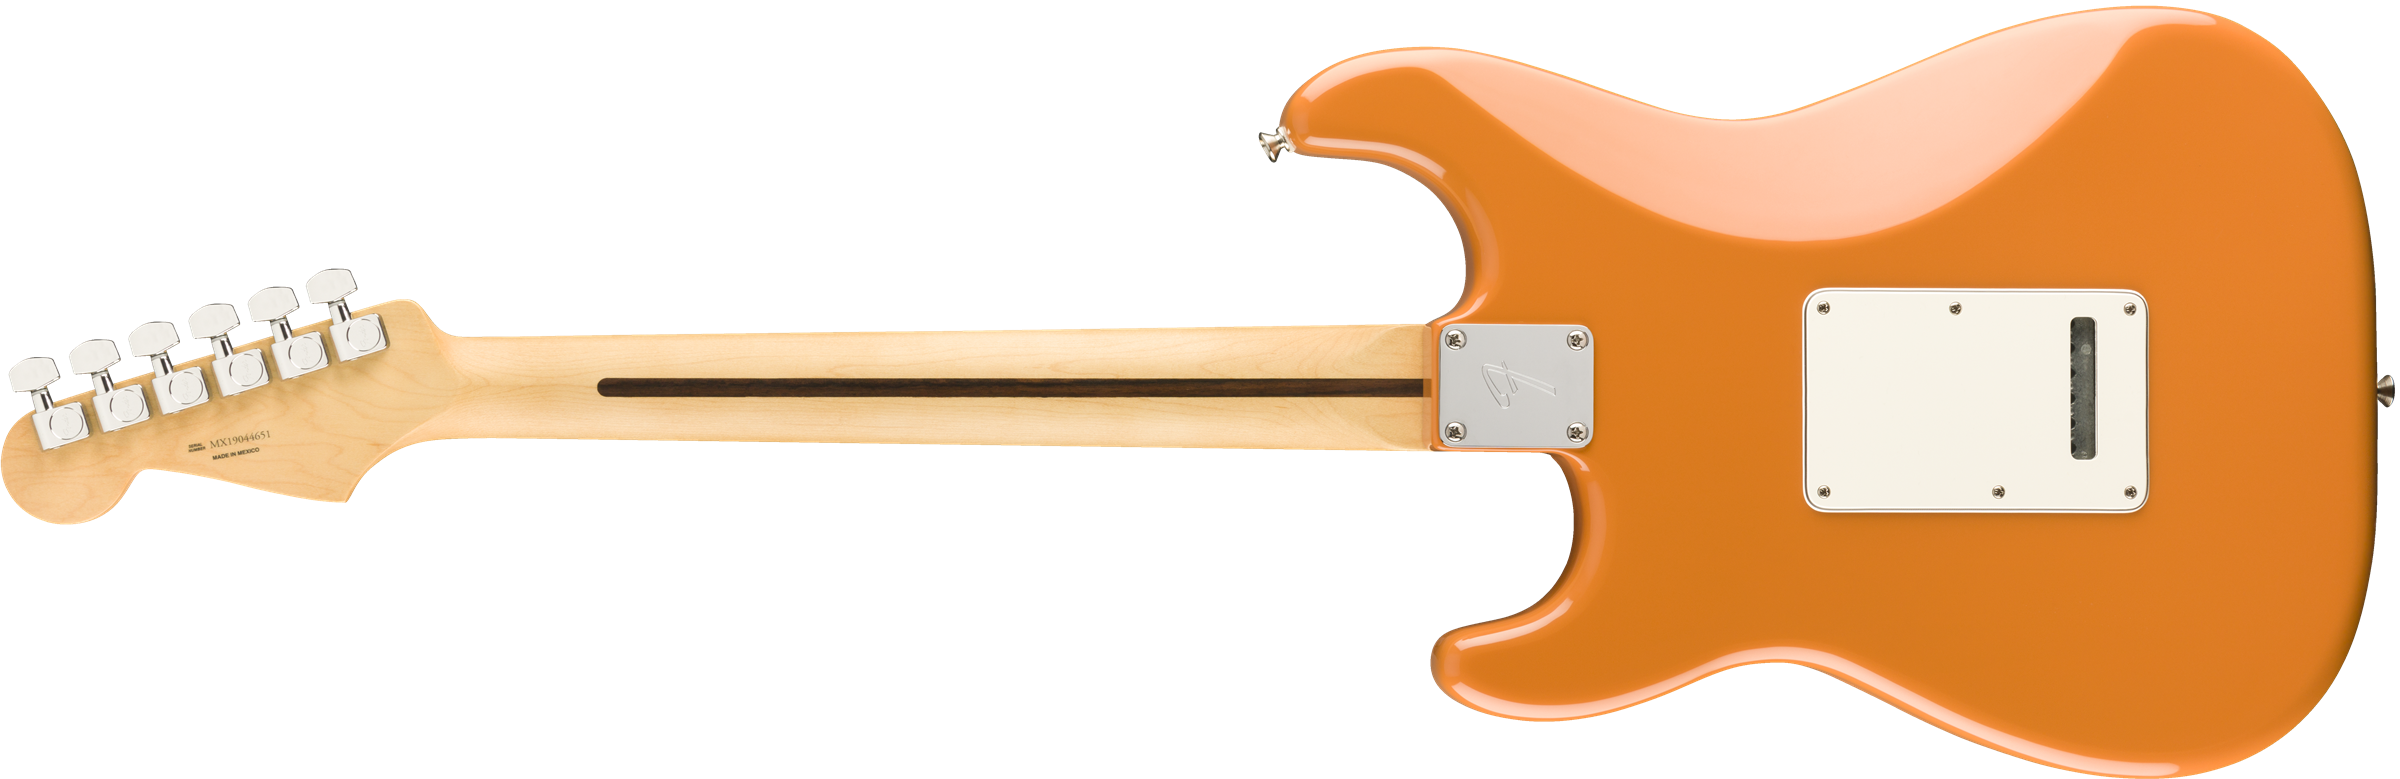 Fender Strat Player Mex Hss Pf - Capri Orange - Guitarra eléctrica con forma de str. - Variation 1